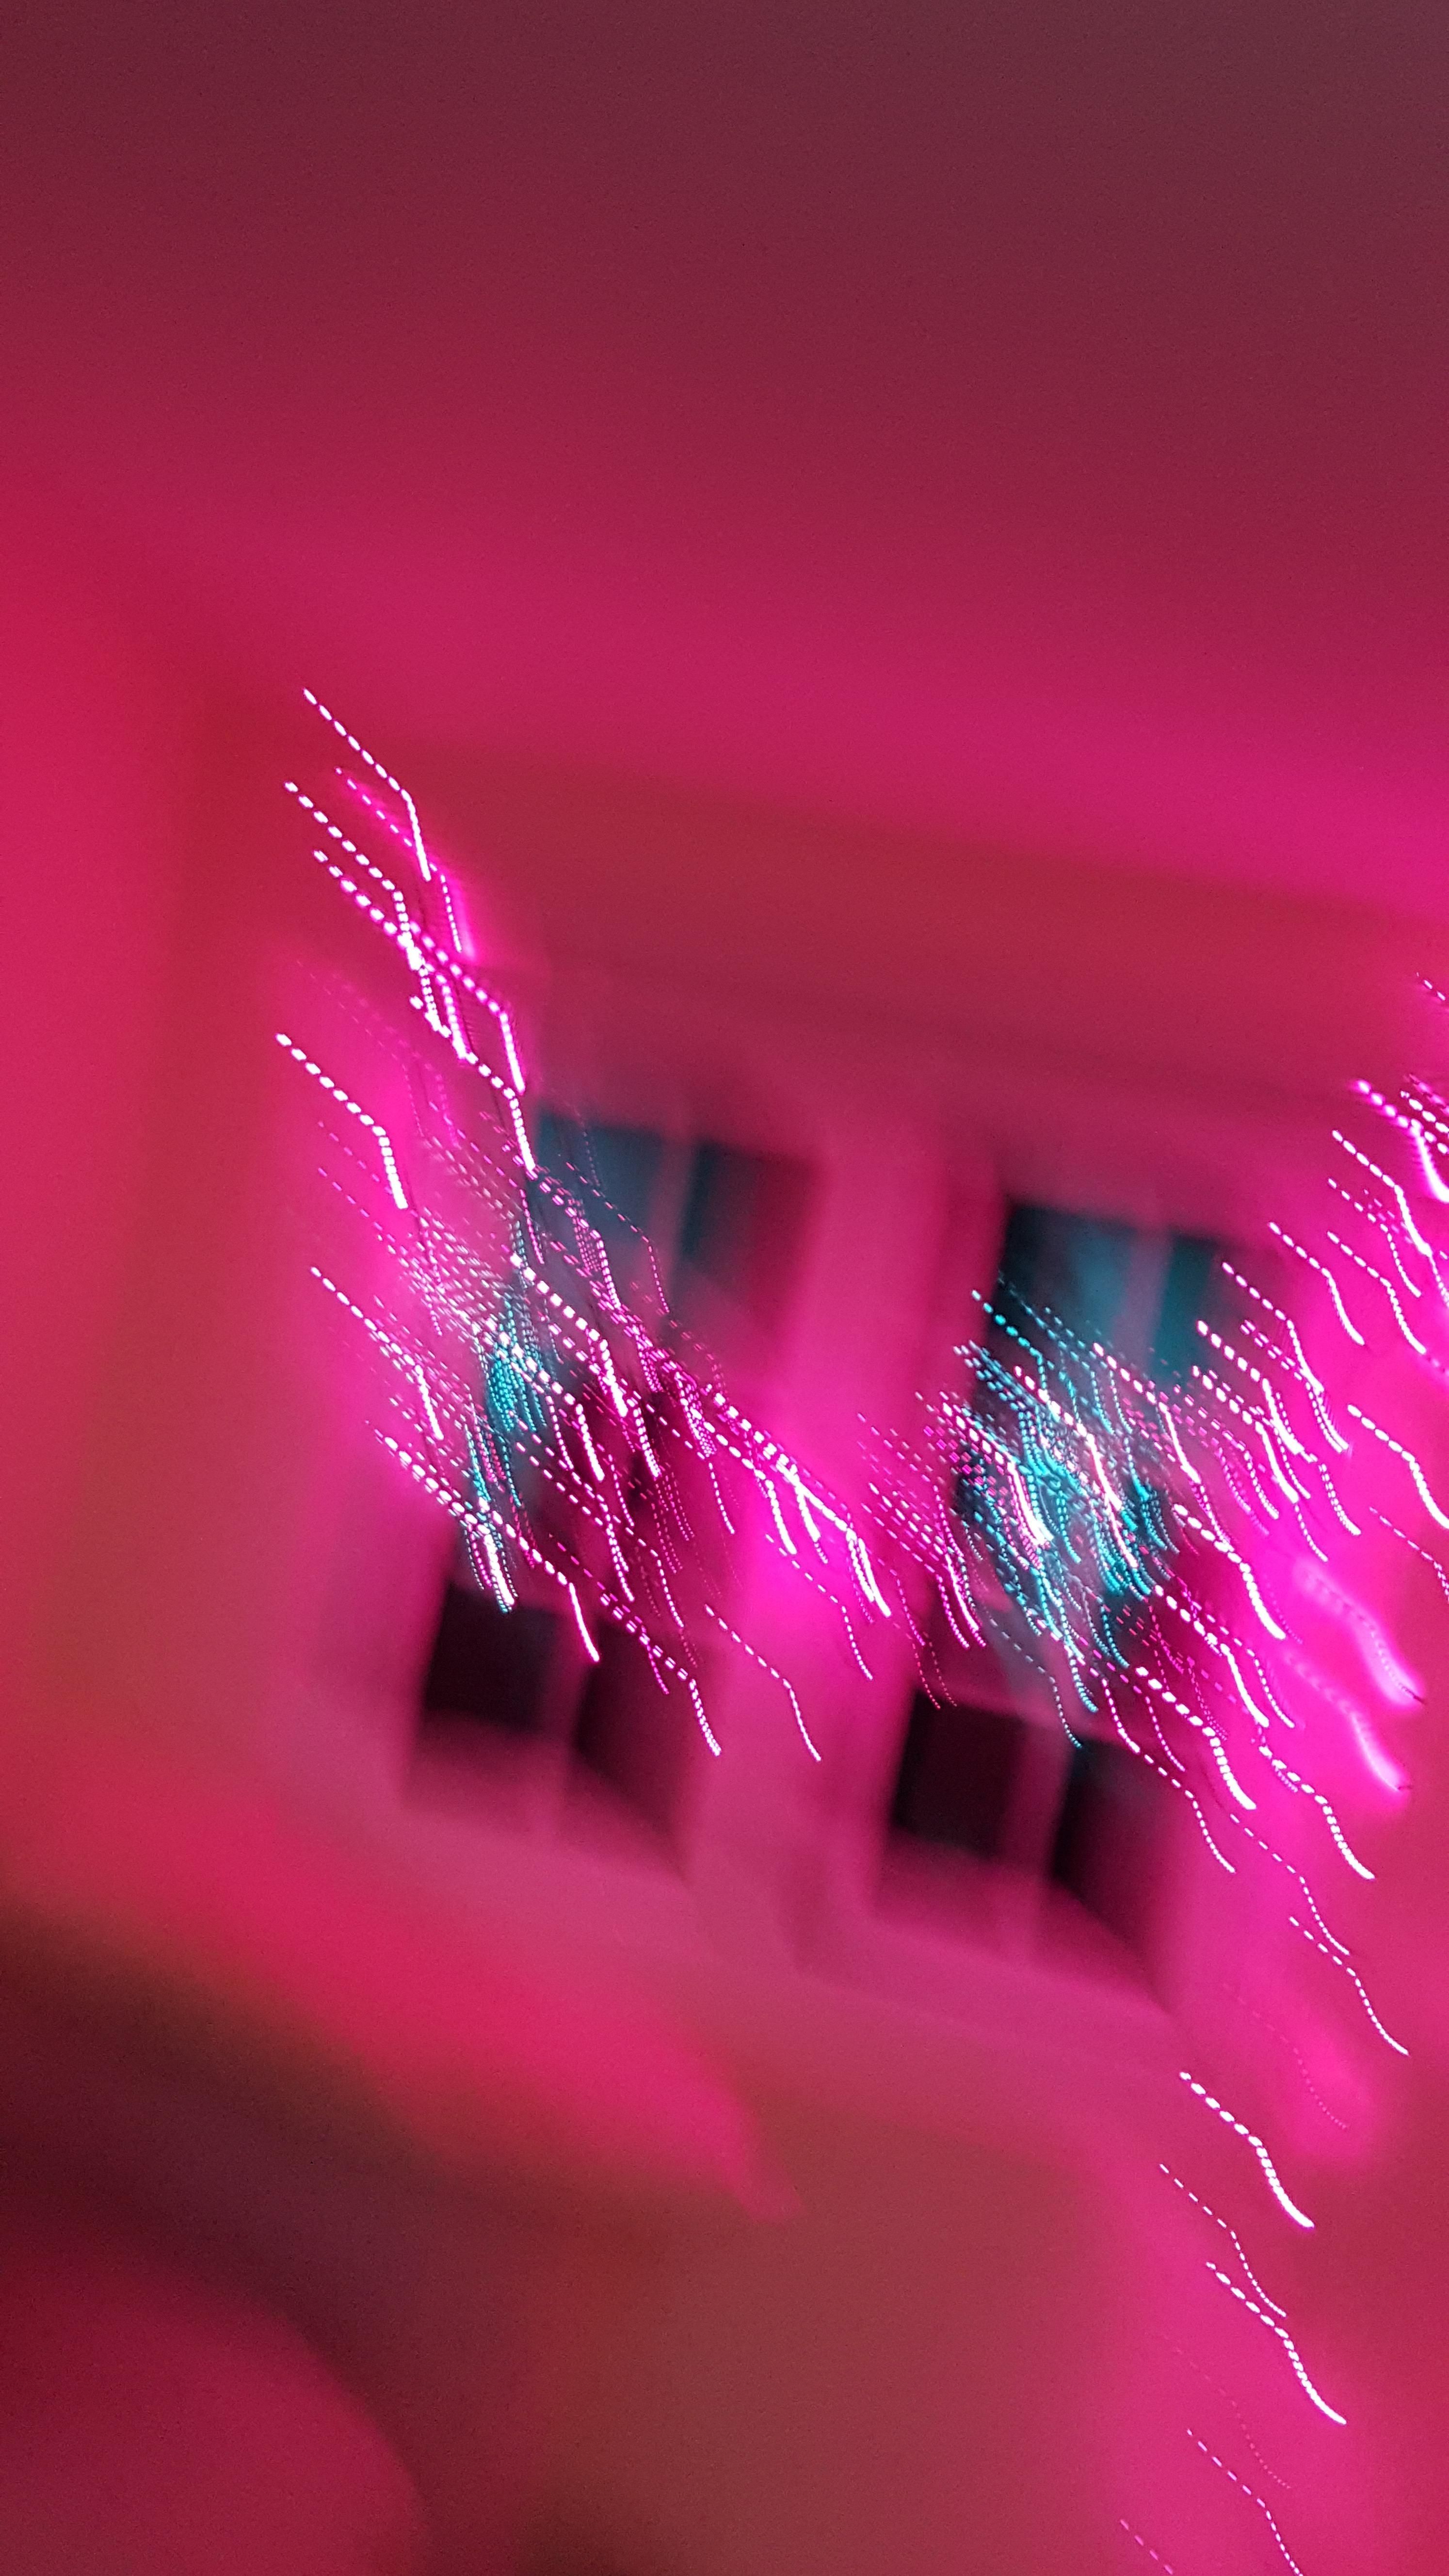 Blurry bedroom fairy lights #vaporwave #glitch #aesthetic. Aesthetic wallpaper, Aesthetic iphone wallpaper, Grunge aesthetic